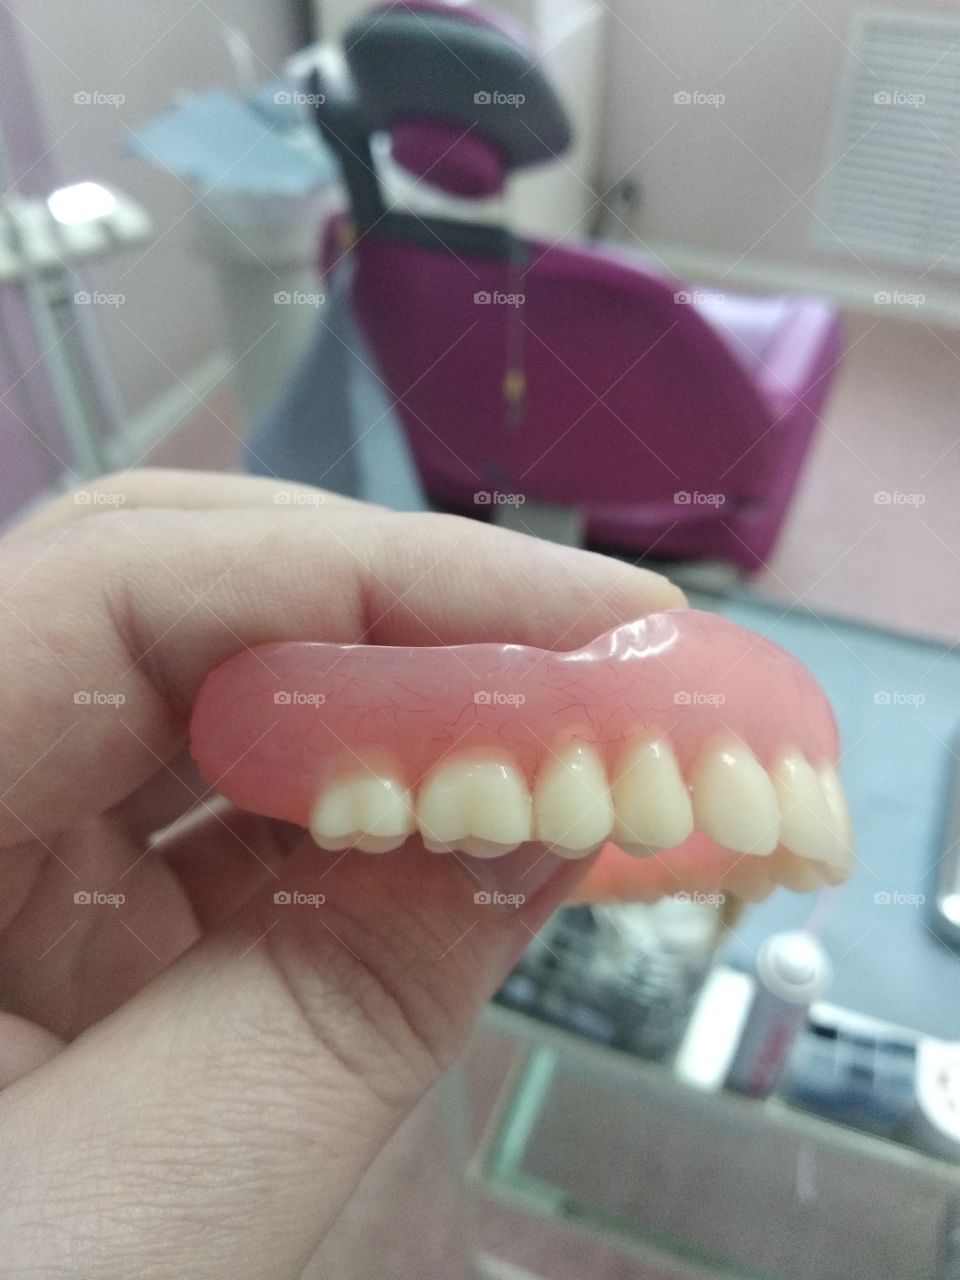 Dental denture in hand